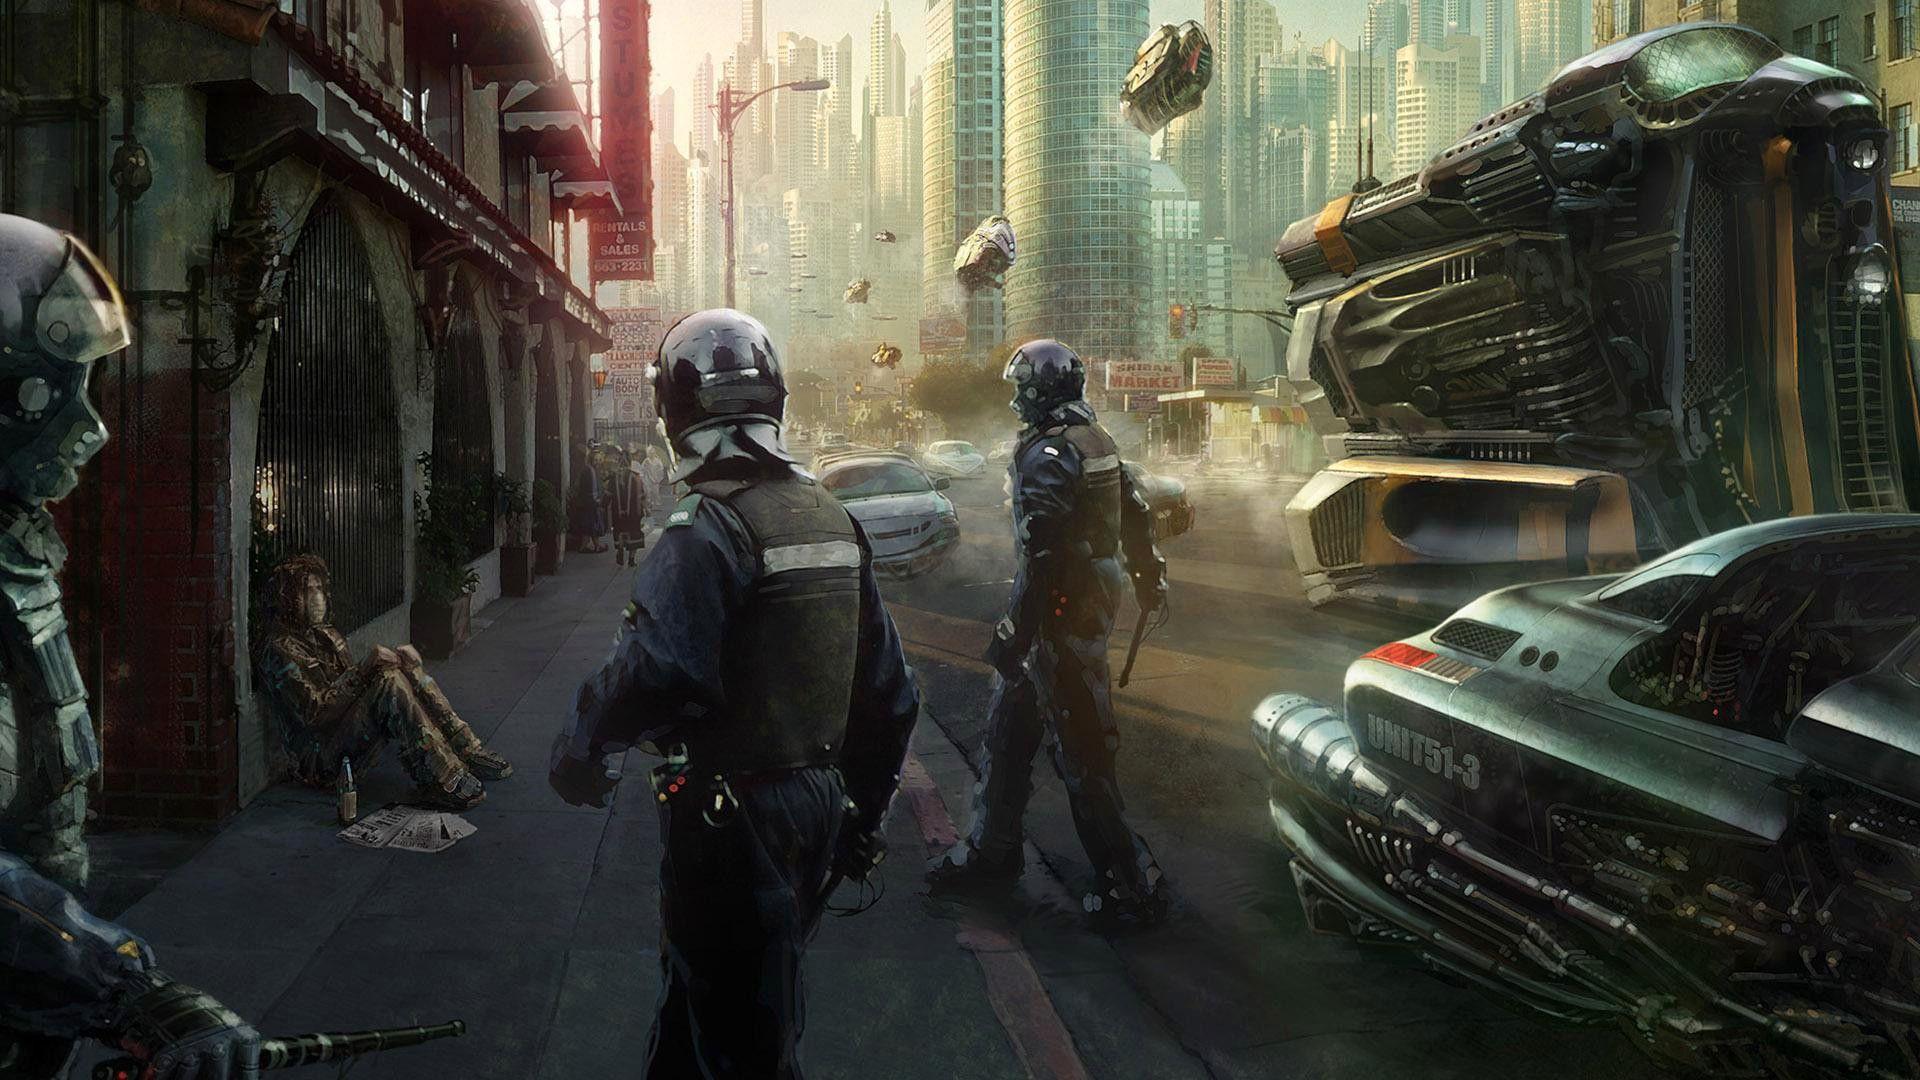 Cyberpunk City Wallpaper Picture